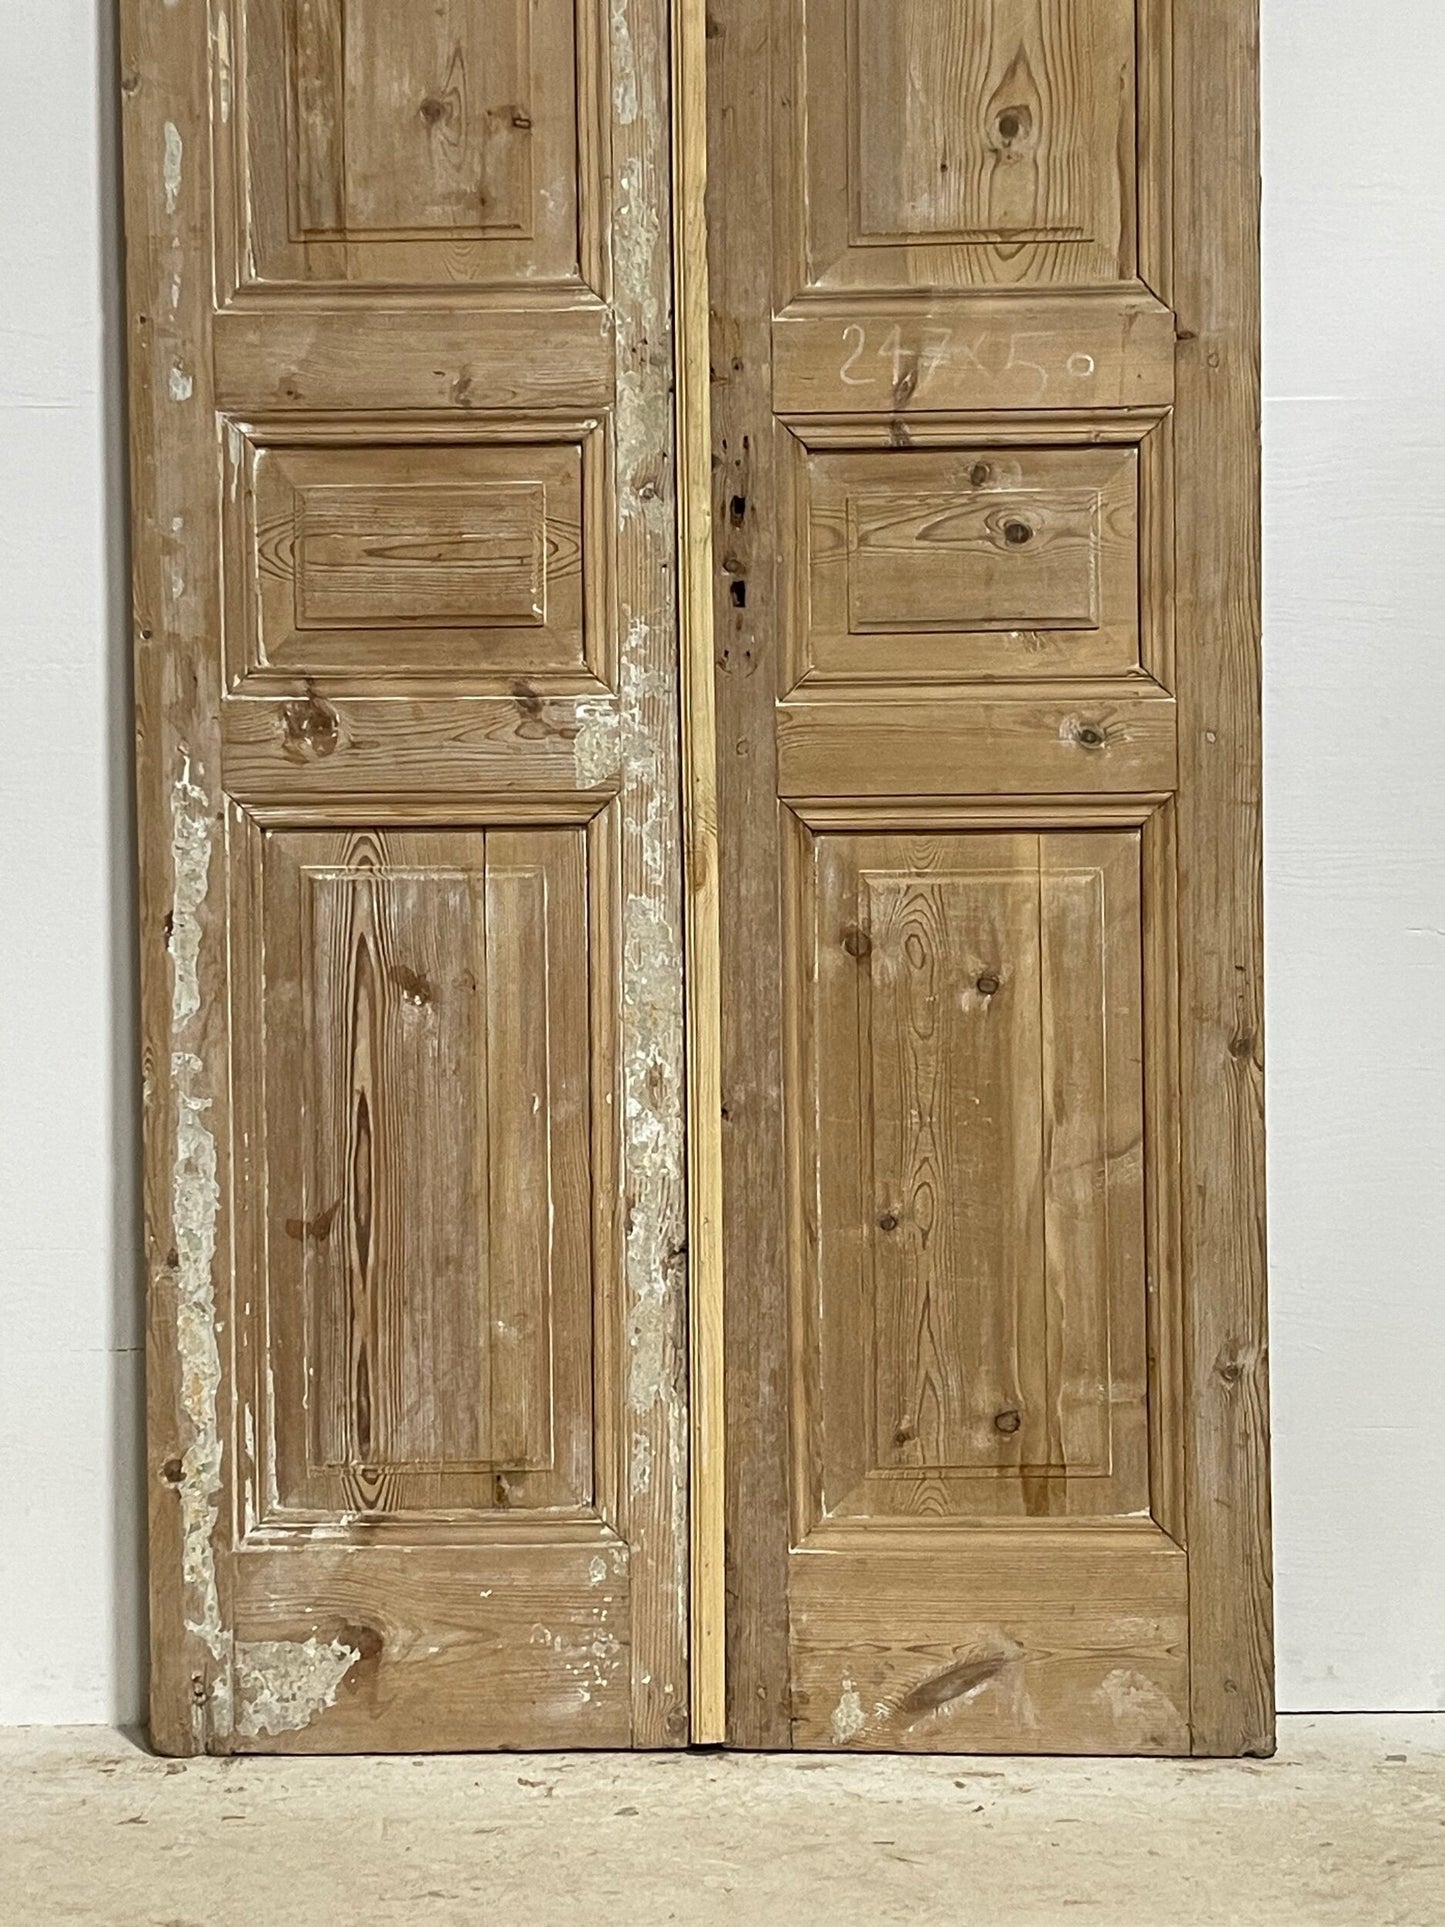 Antique French doors (97x39.75) H0121s